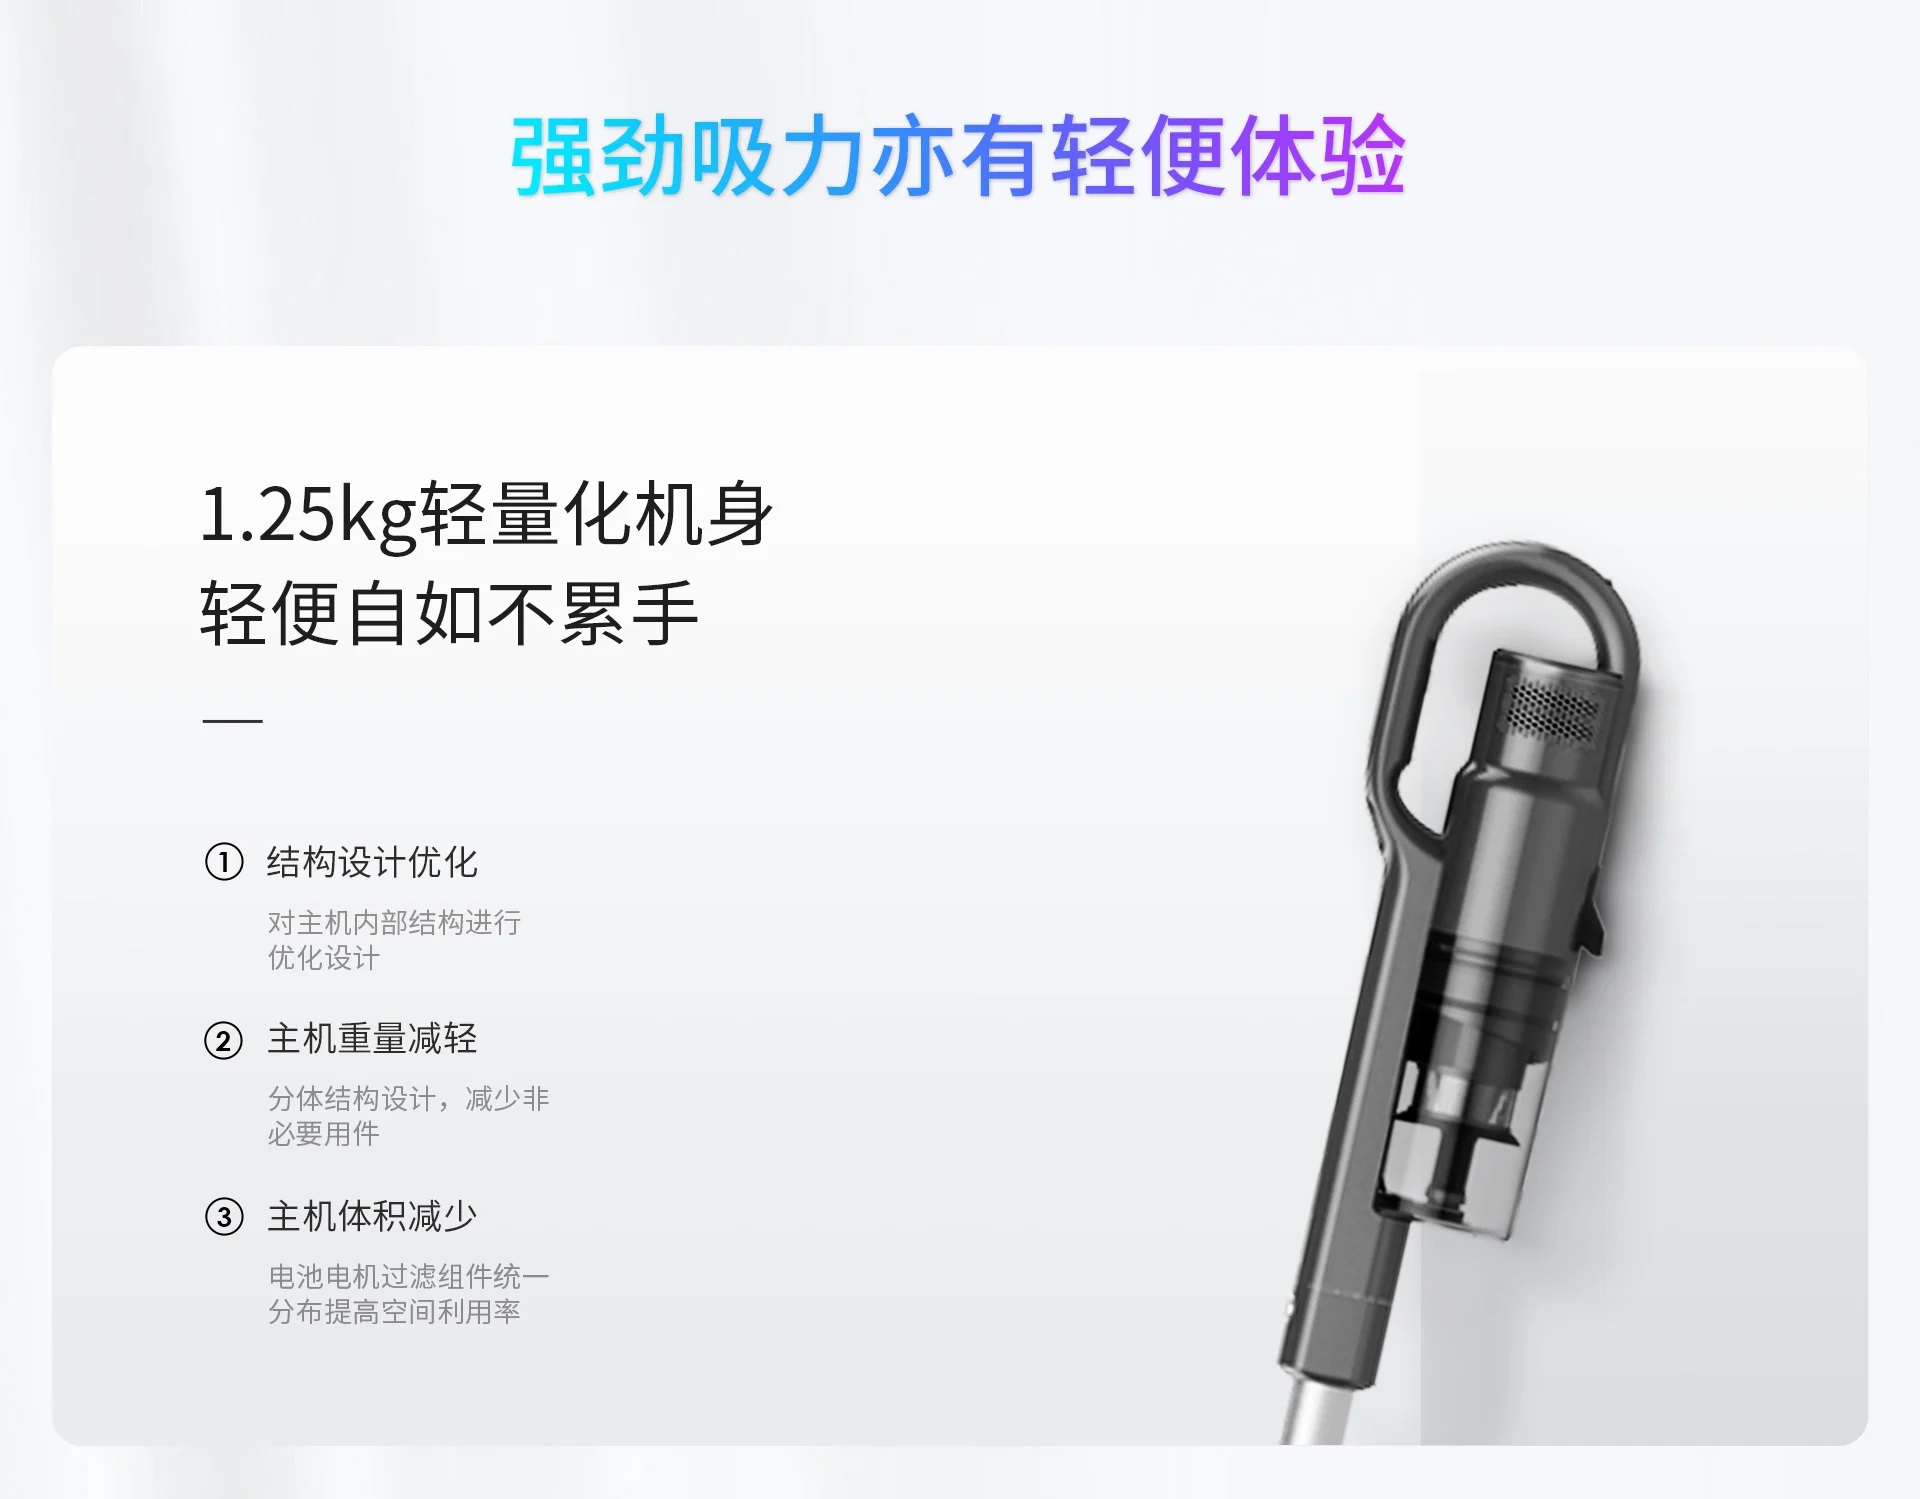 Huawei lancia l'aspirapolvere wireless Jimmy Smart 1S in Cina 1